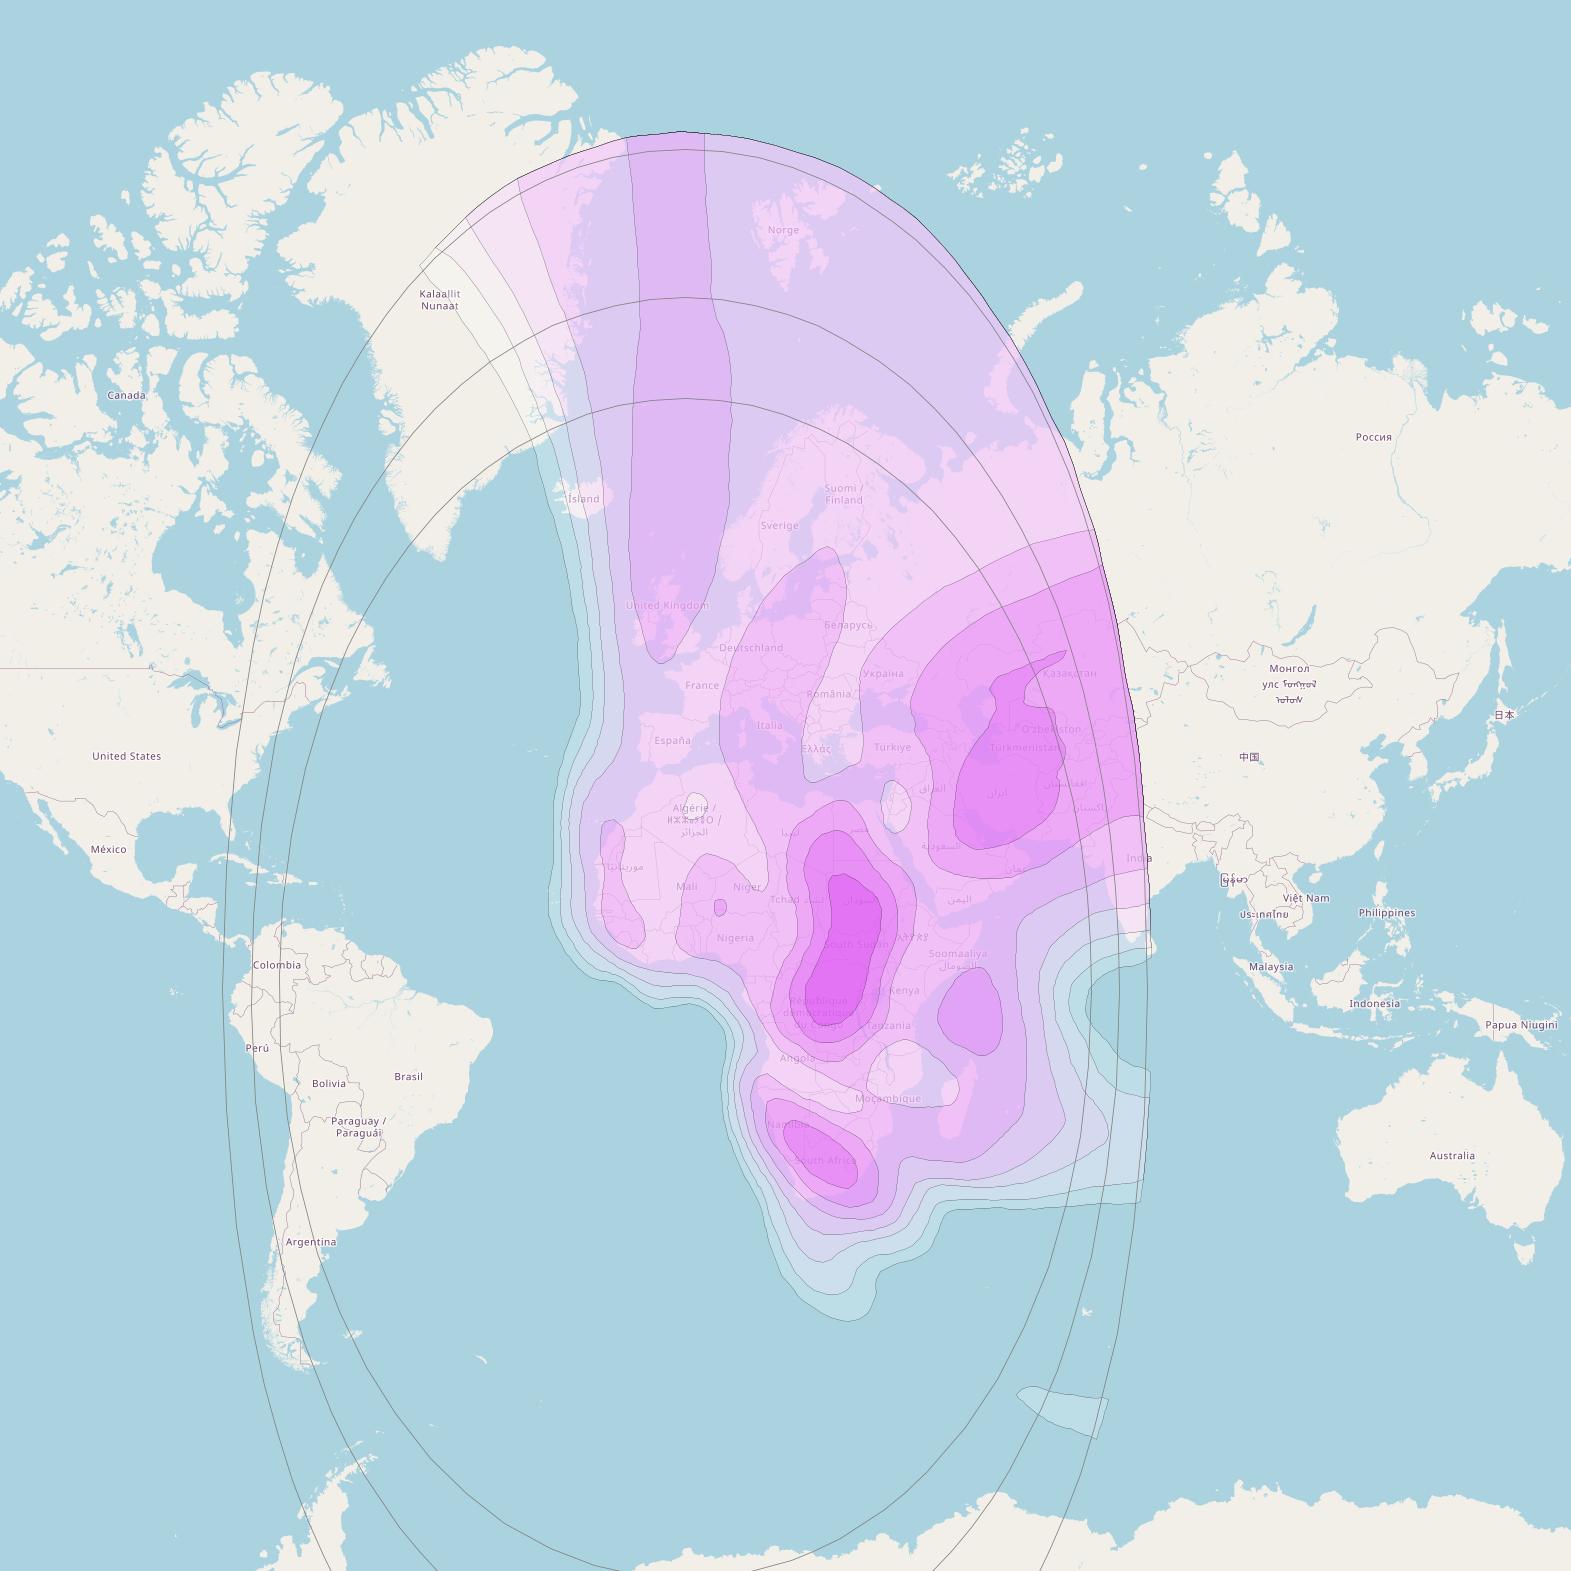 Intelsat 10-02 at 1° W downlink C-band East Hemi Beam coverage map